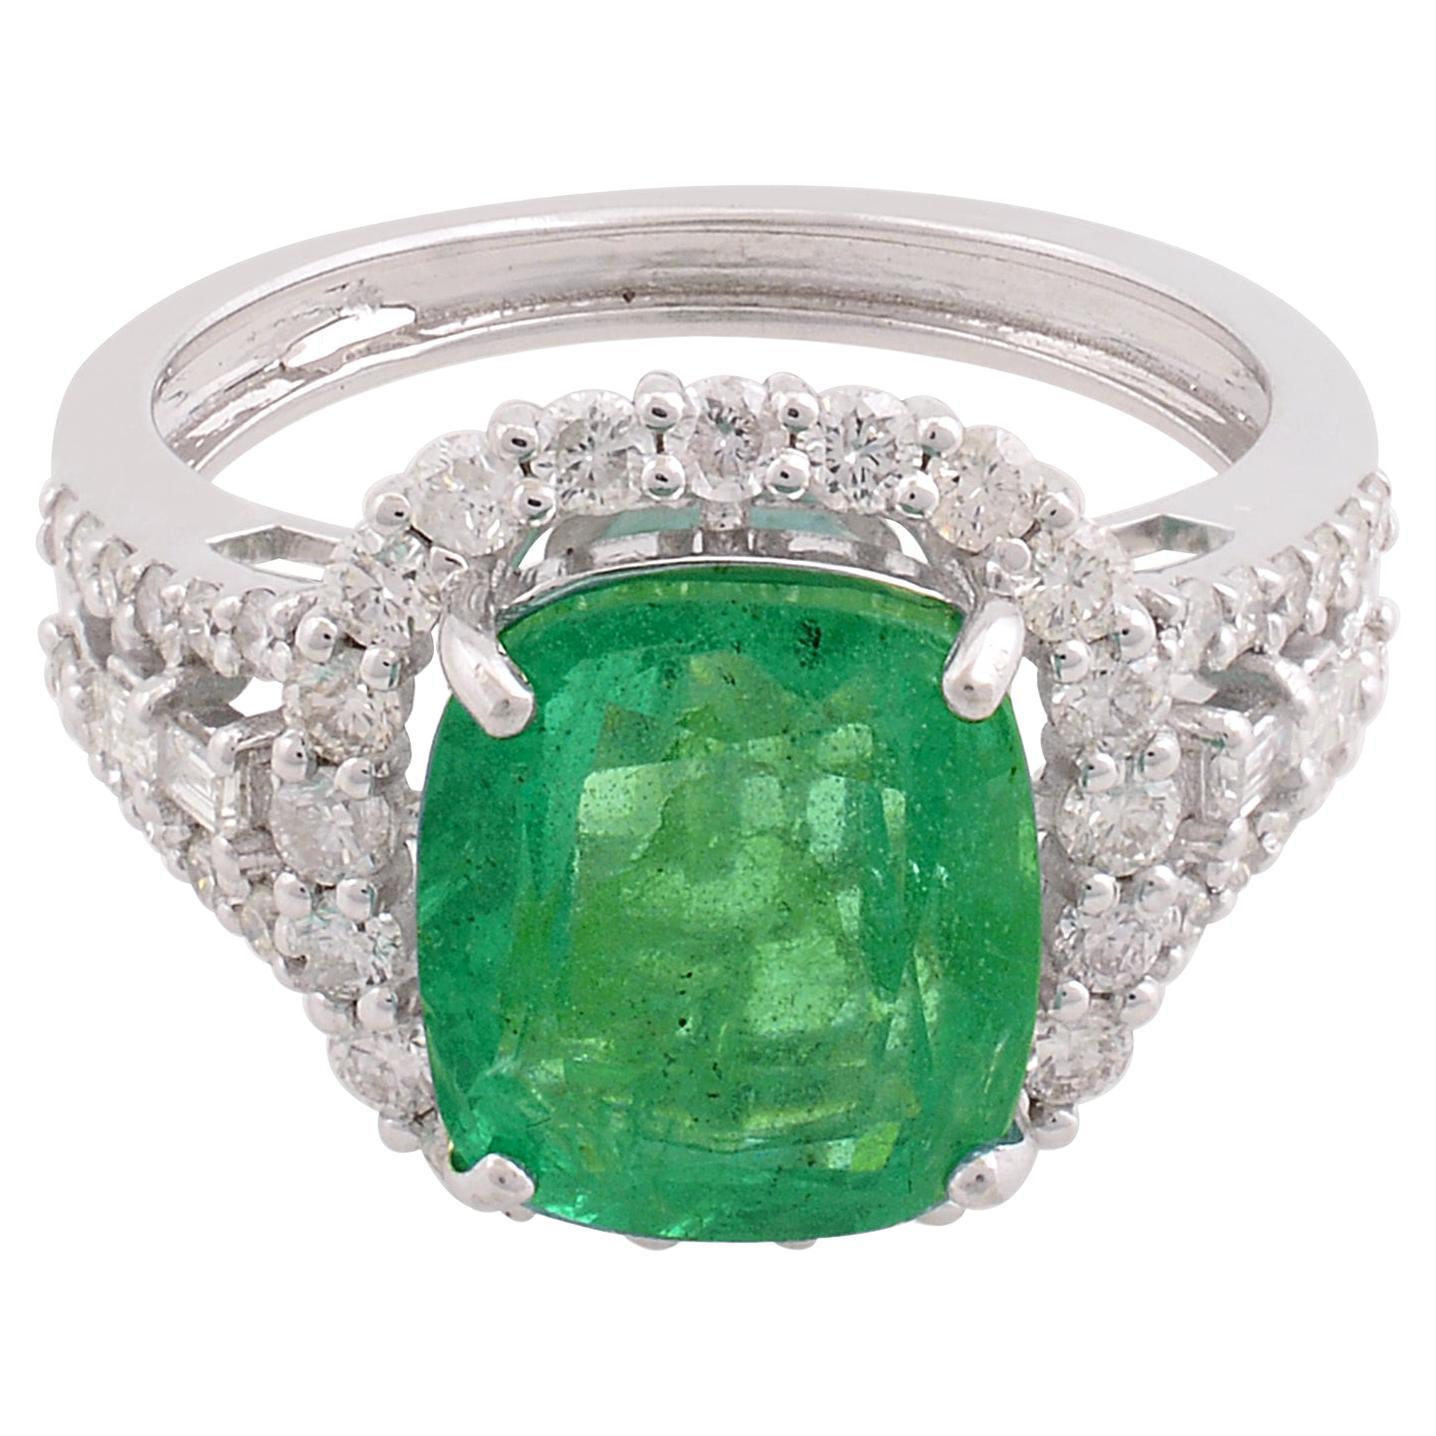 For Sale:  Natural Emerald Gemstone Cocktail Ring Diamond 10 Karat White Gold Fine Jewelry